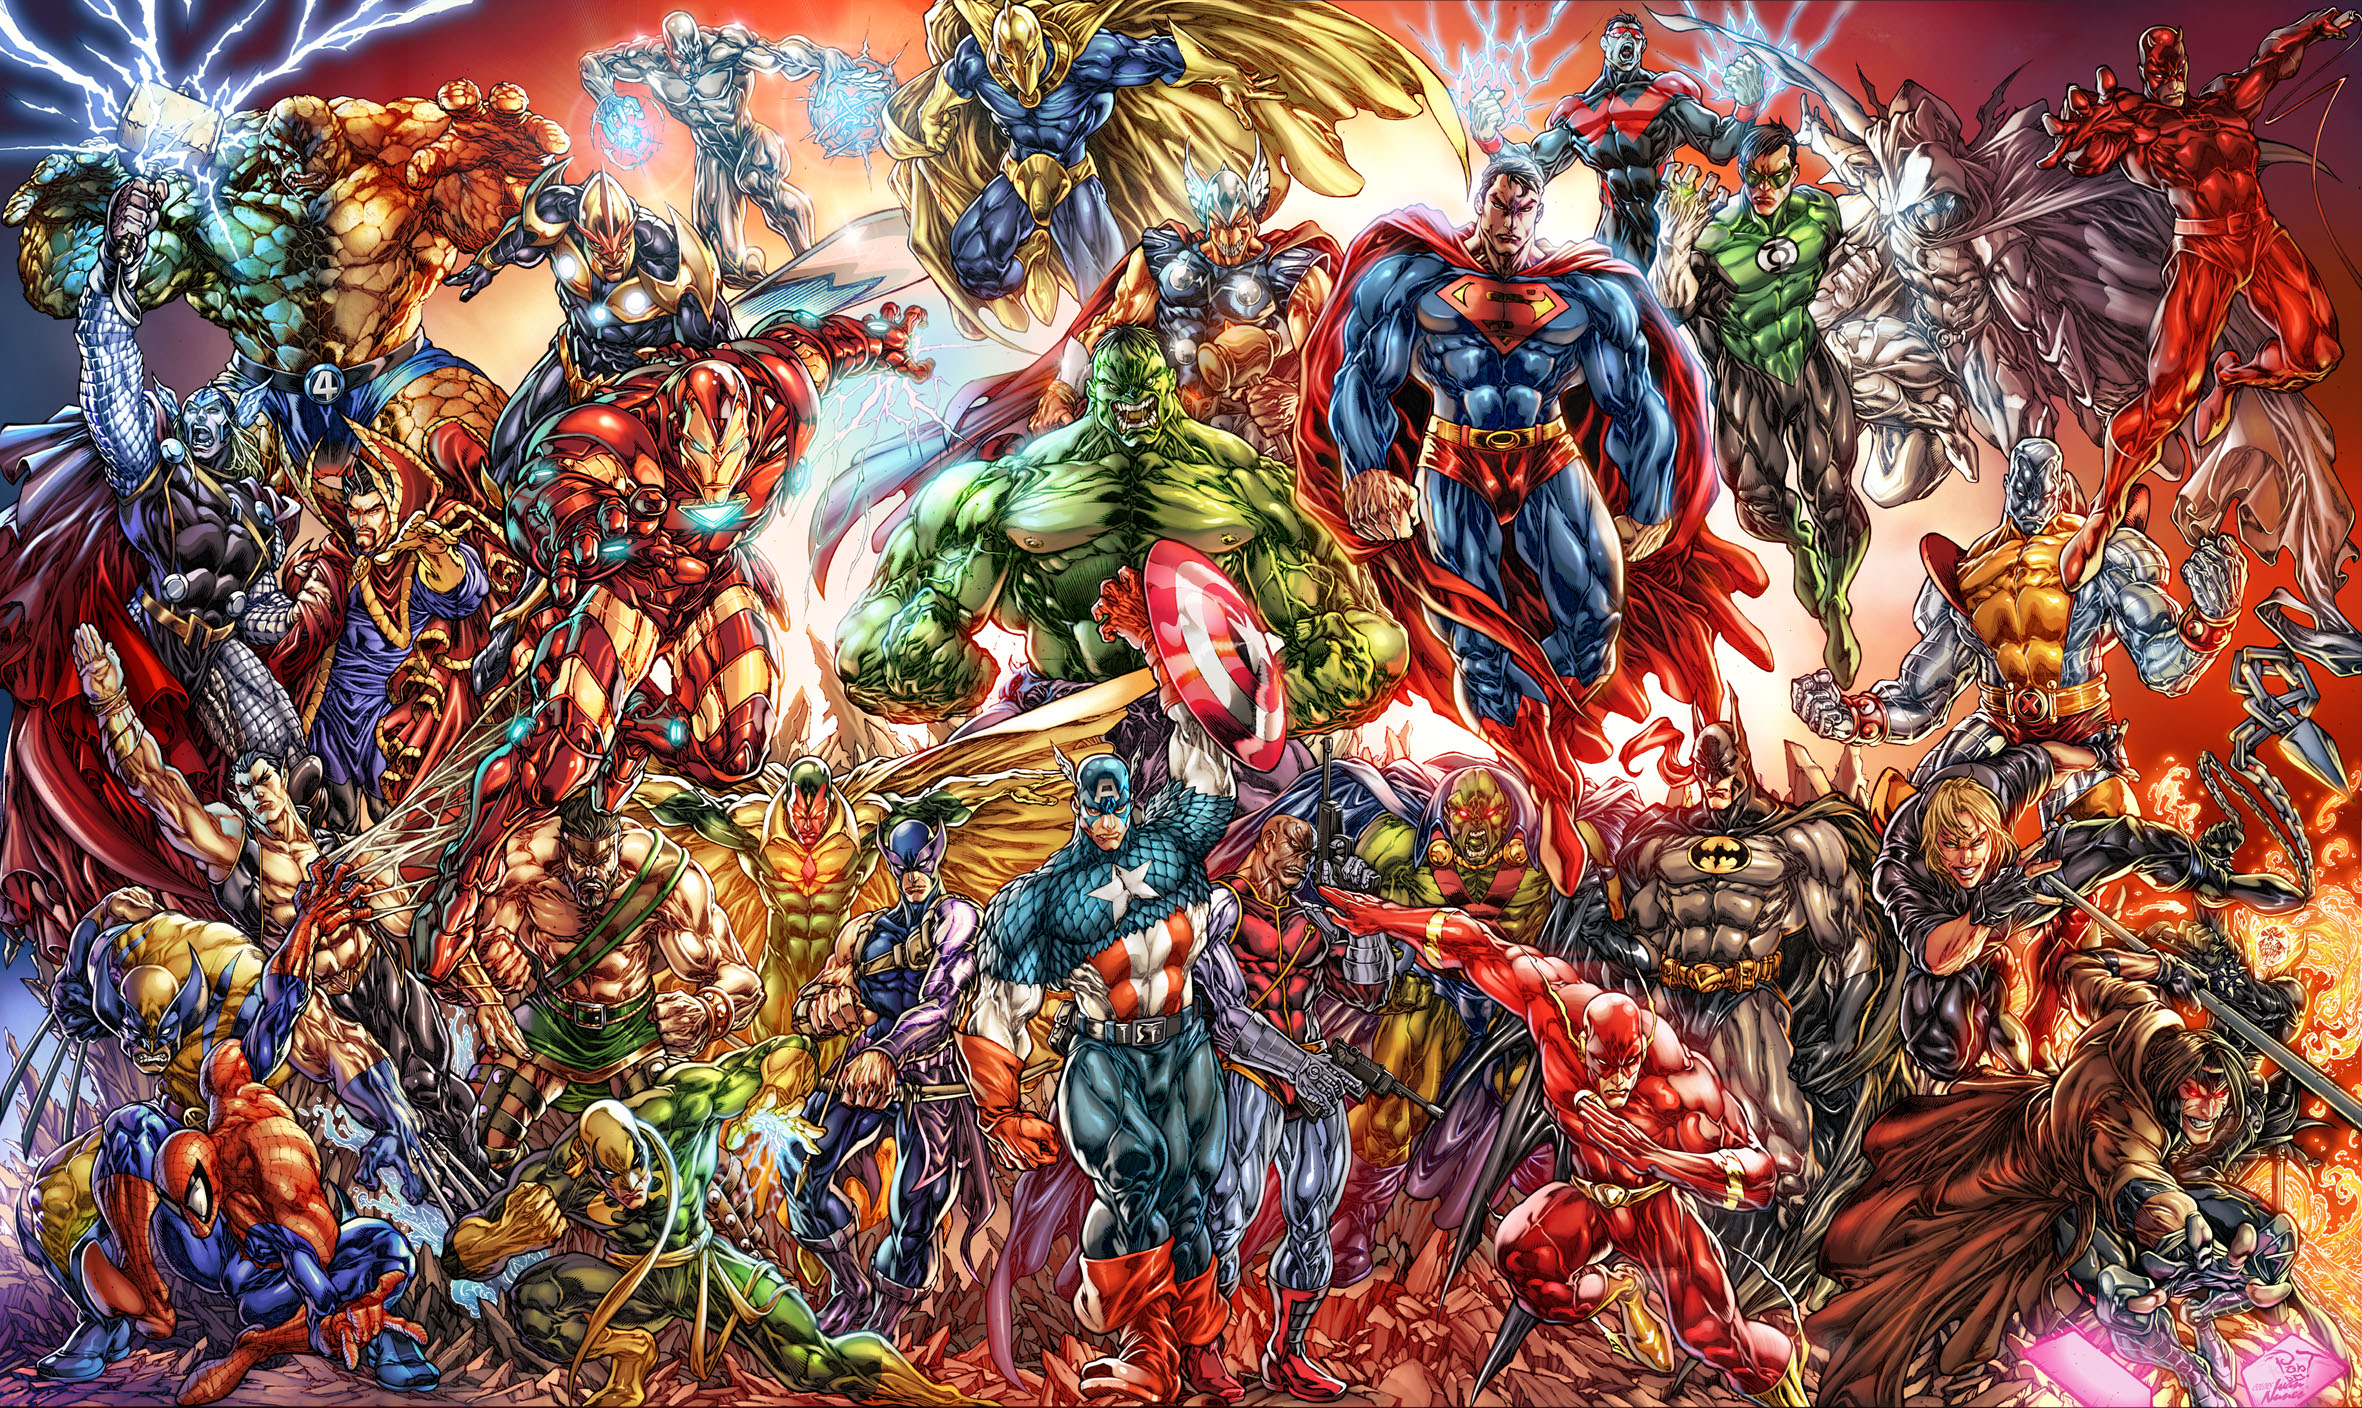 hal jordan, superman, martian manhunter, batman, spider man, daredevil, dc comics, hulk, comics, collage, barry allen, wolverine, ghost rider, ben grimm, beta ray bill, captain america, clint barton, colossus, danny rand, deathlok, doctor fate (dc comics), doctor strange, flash, gambit (marvel comics), green lantern, hawkeye, hercules (marvel comics), iron fist (marvel comics), iron man, j'onn j'onzz, longshot (marvel comics), moon knight, namor the sub mariner, nightwing, nova (marvel comics), peter parker, silver surfer, sub mariner, thing (marvel comics), thor, vision (marvel comics), wonder man download HD wallpaper